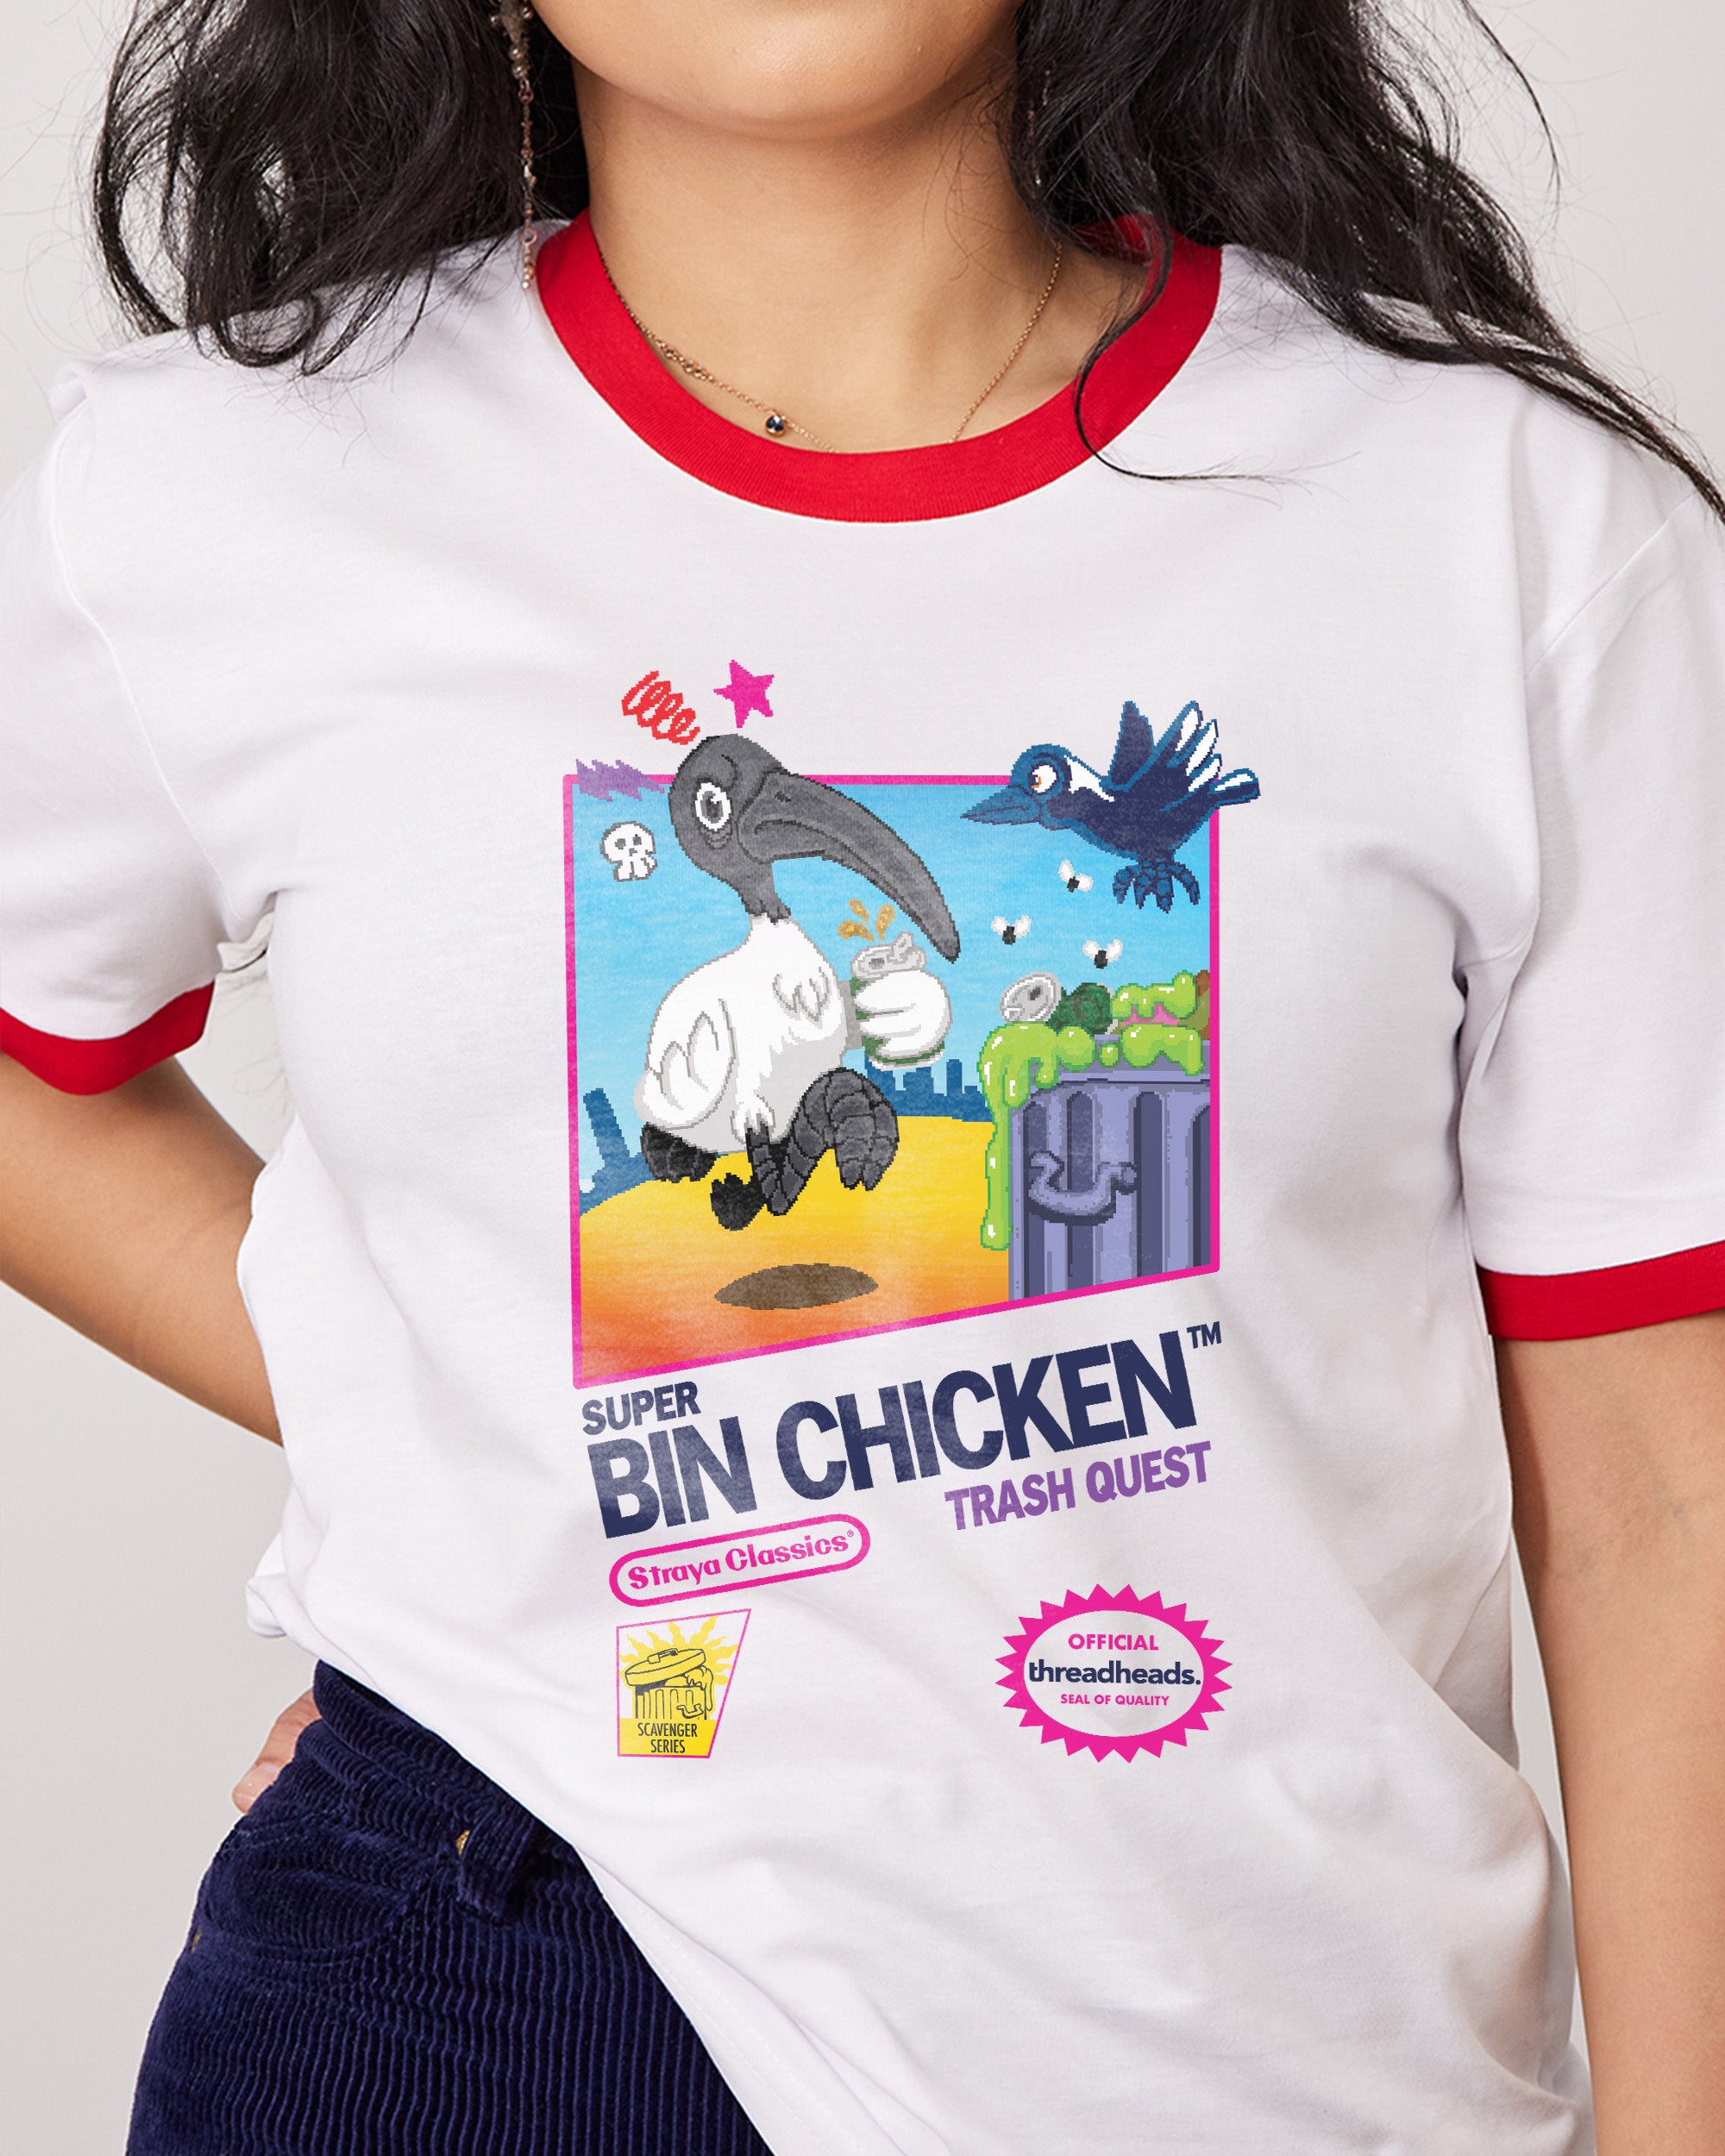 Super Bin Chicken T-Shirt